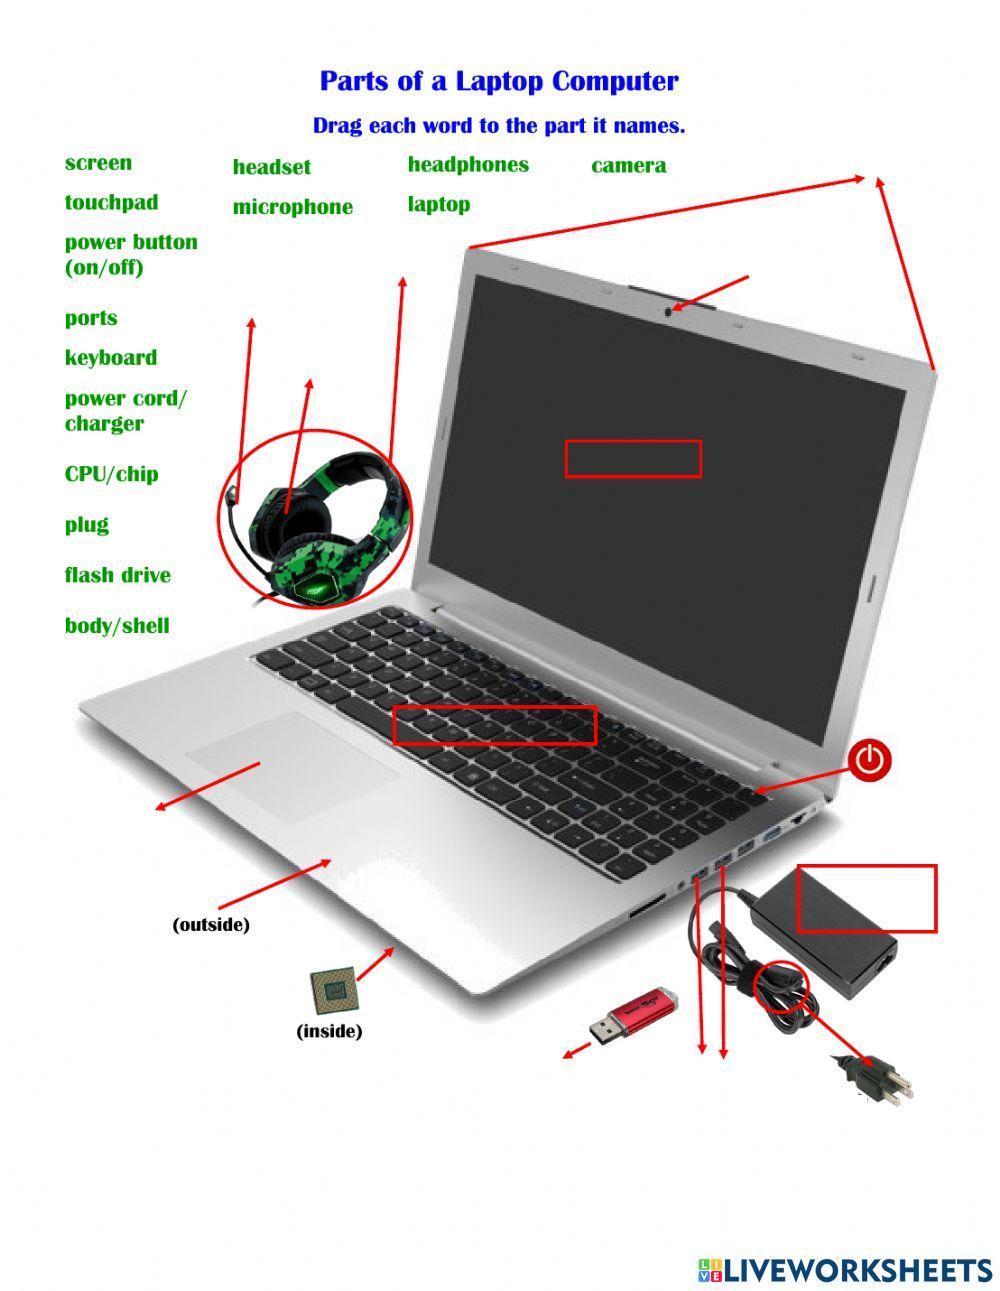 Parts of a Laptop Computer